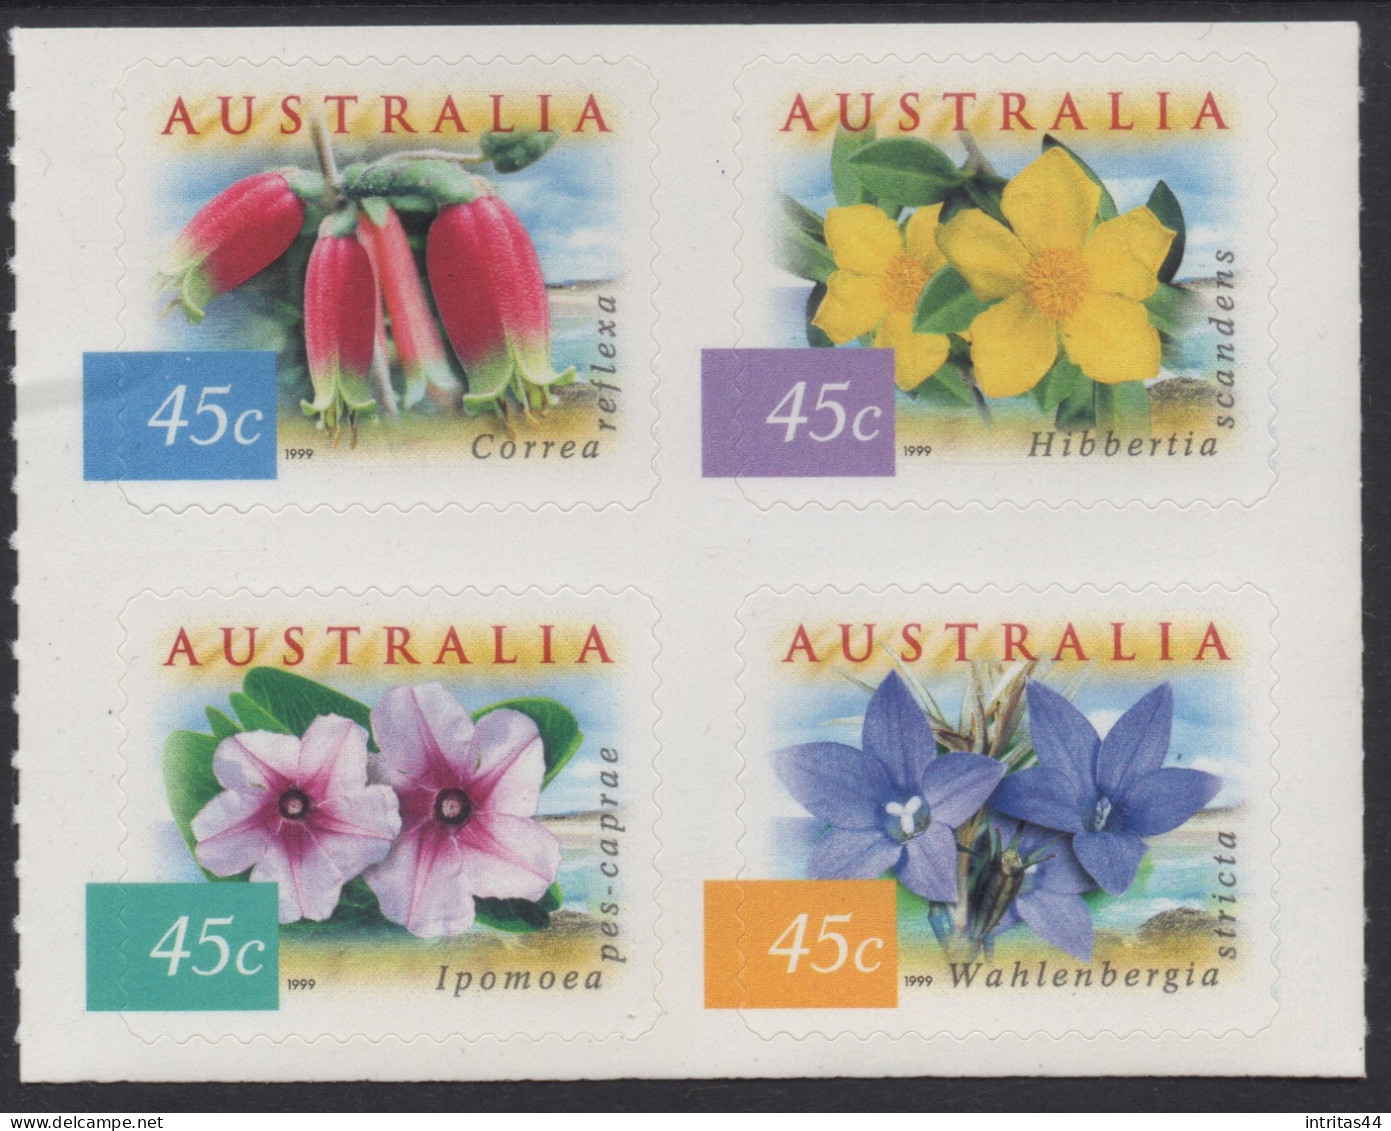 AUSTRALIA 1999  " FAUNA AND FLORA (3rd SERIES) COSTAL ENVIRONMENT FLOWERS "  BLOCK MNH - Blocks & Sheetlets